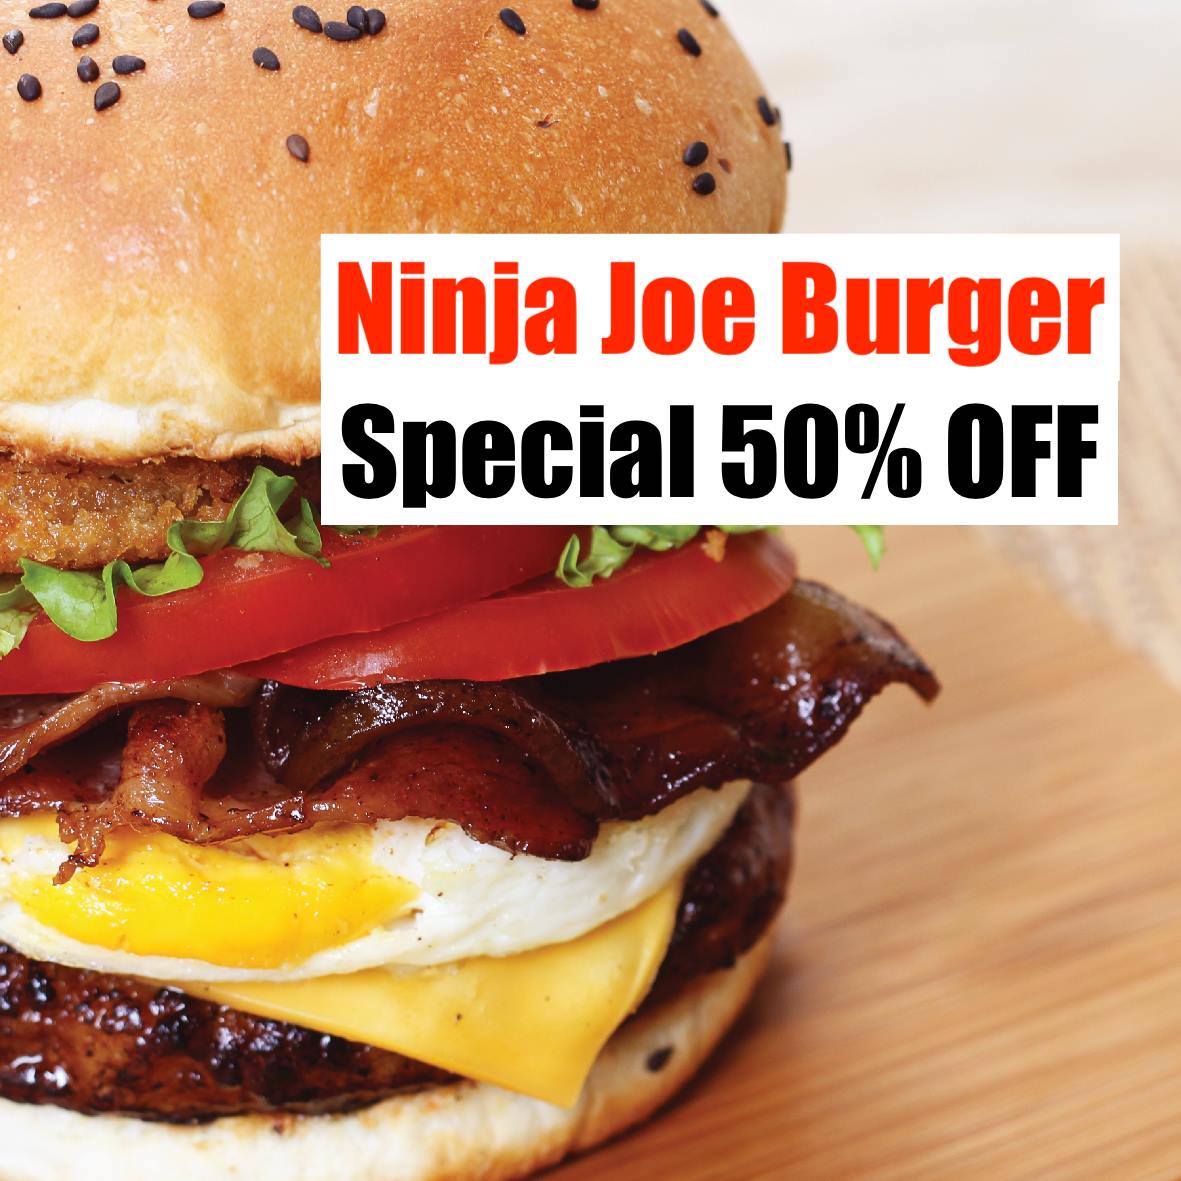 ninja-joe-burger-promotion-1.jpg